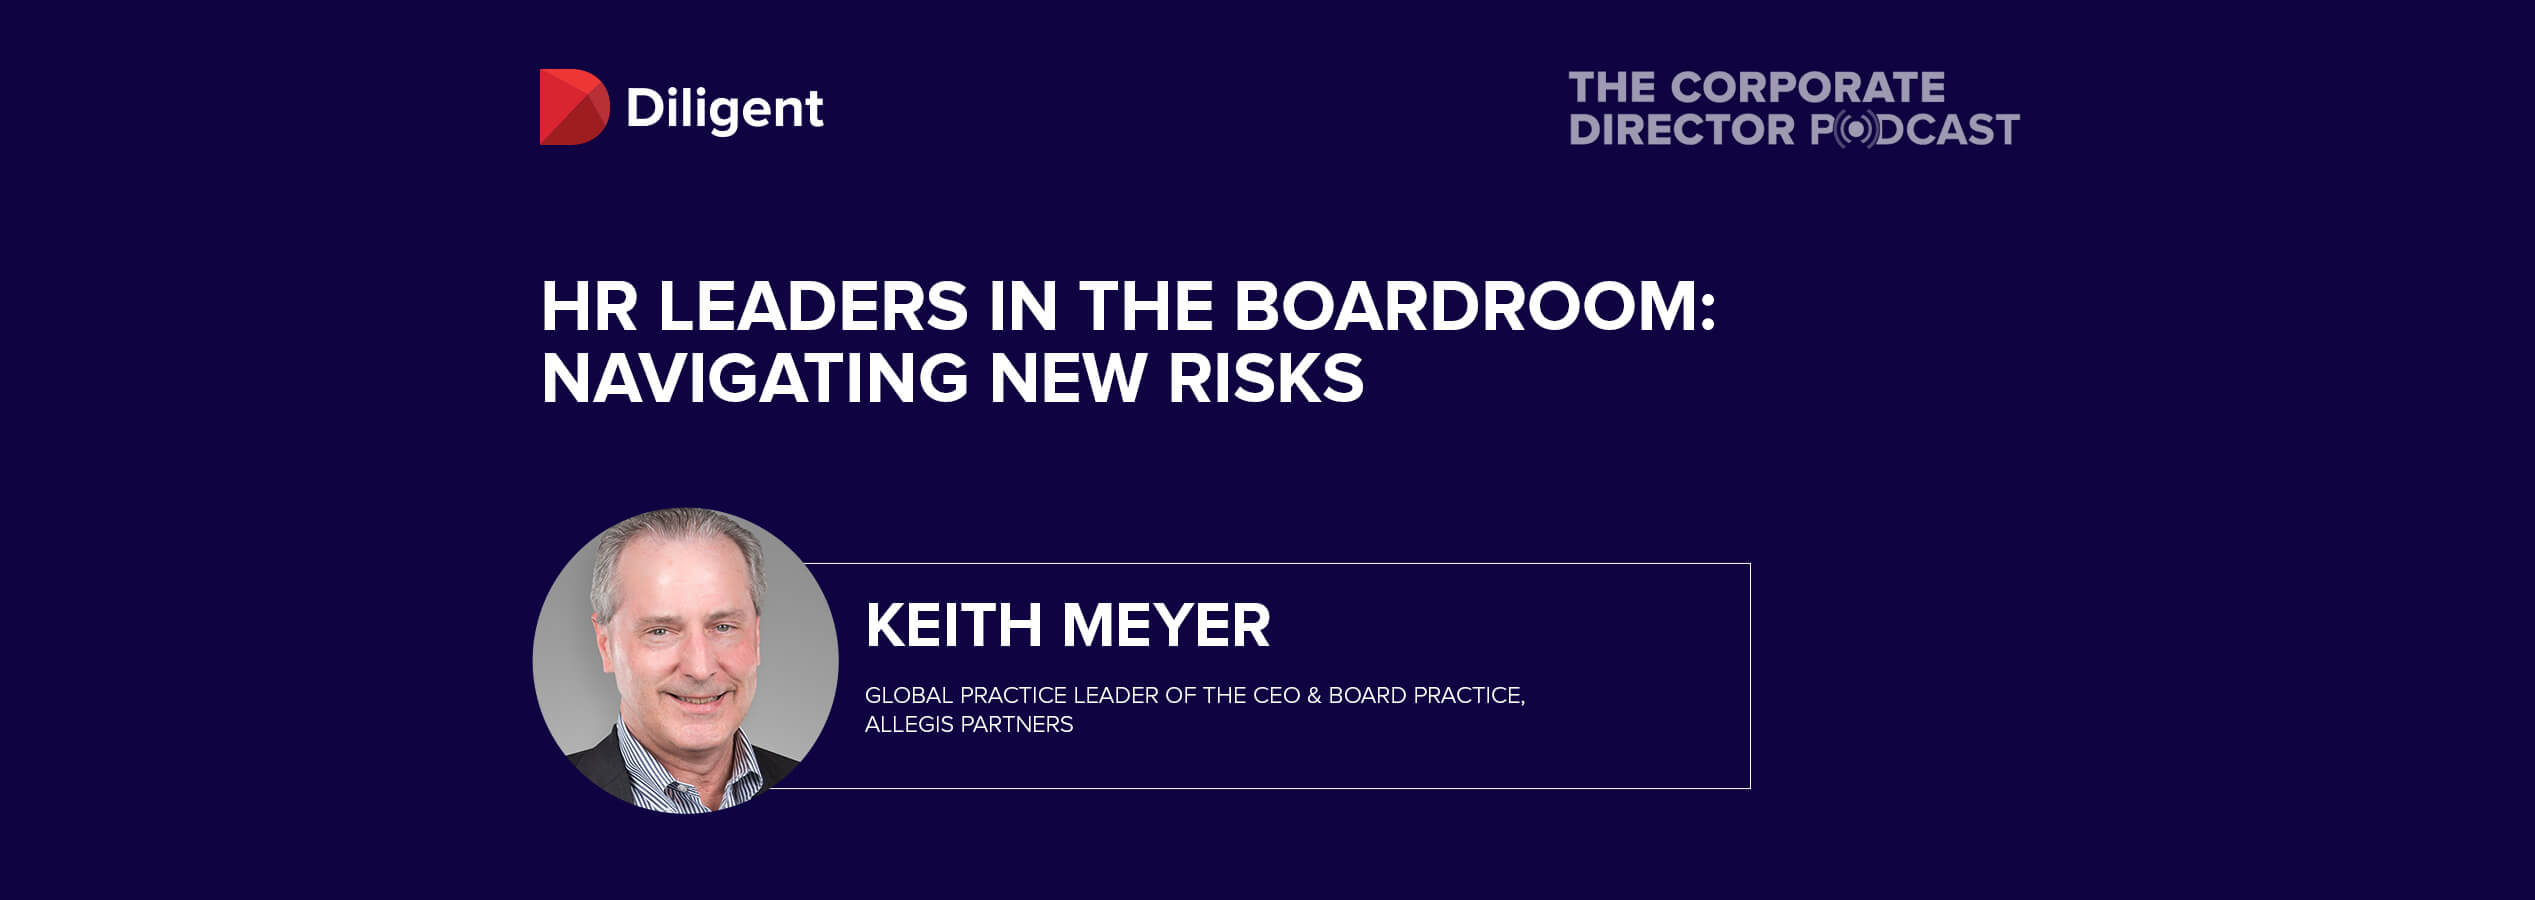 HR Leaders in the Boardroom: Navigating new risks episode cover